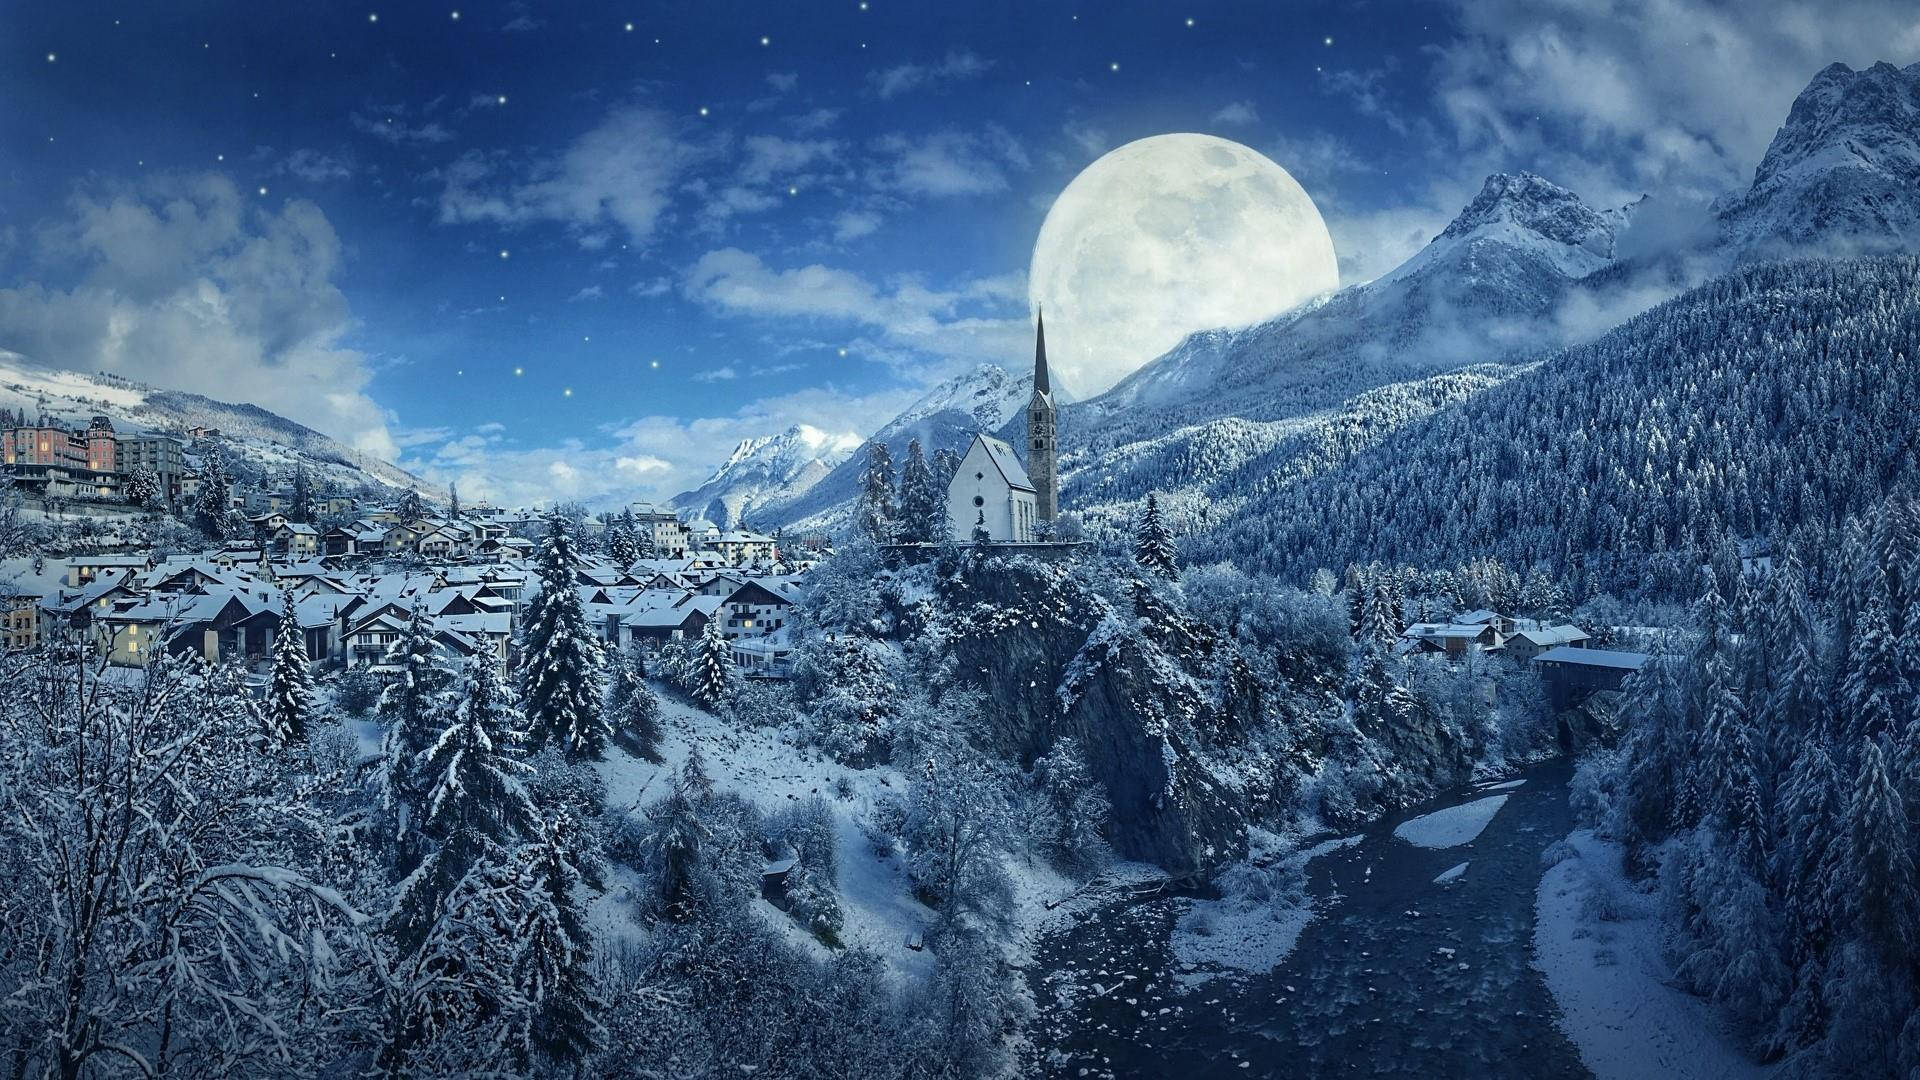 Top 999+ Winter Landscape Wallpaper Full HD, 4K✅Free to Use